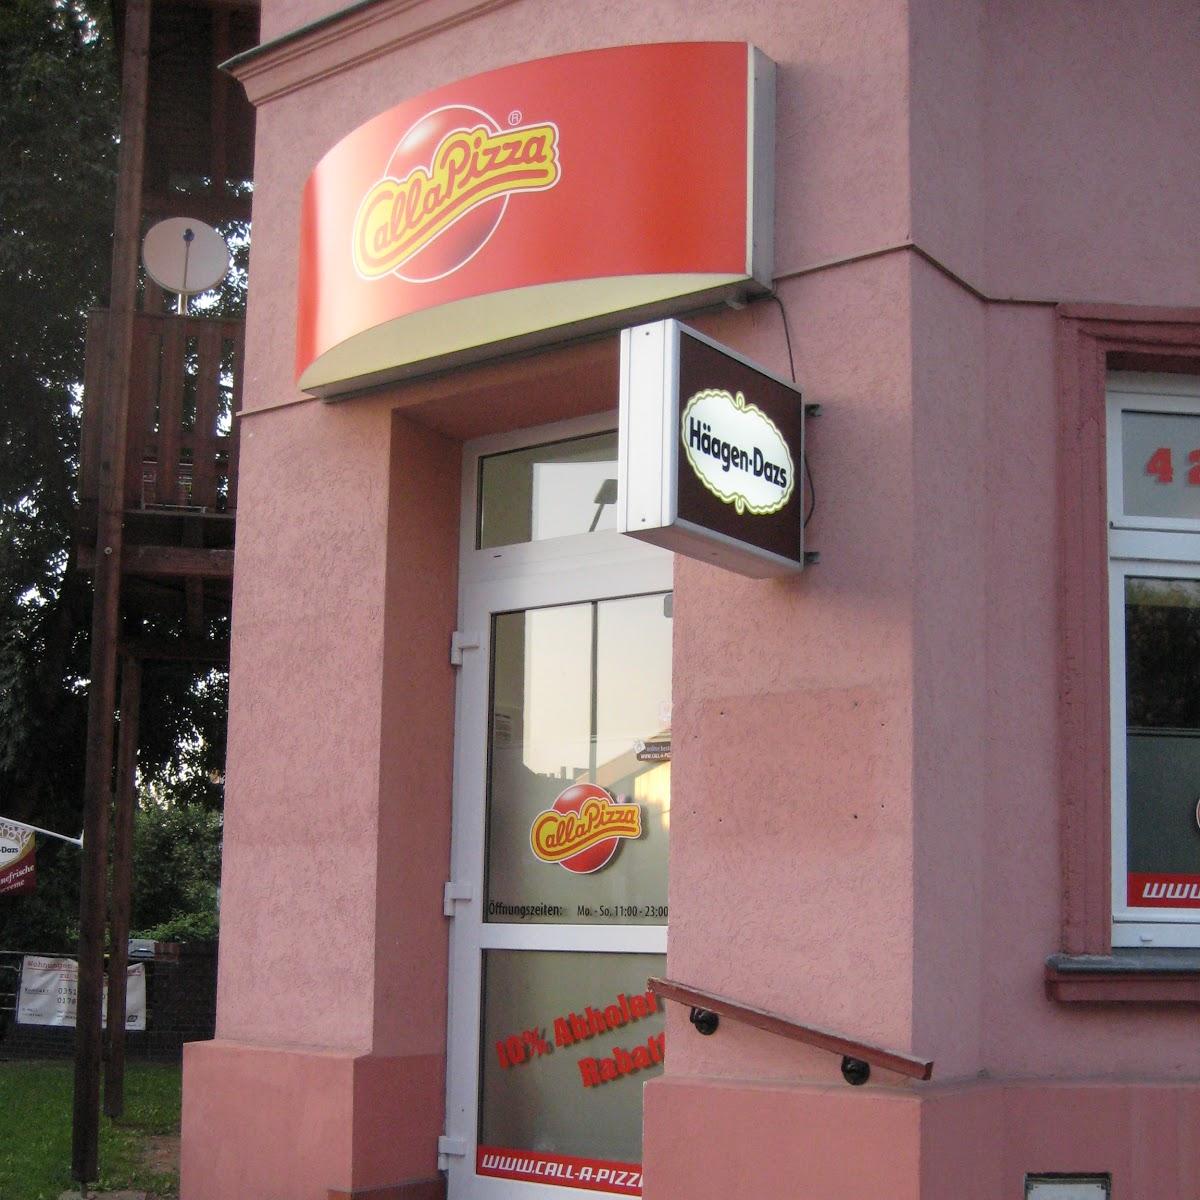 Restaurant "Call a Pizza" in Dresden